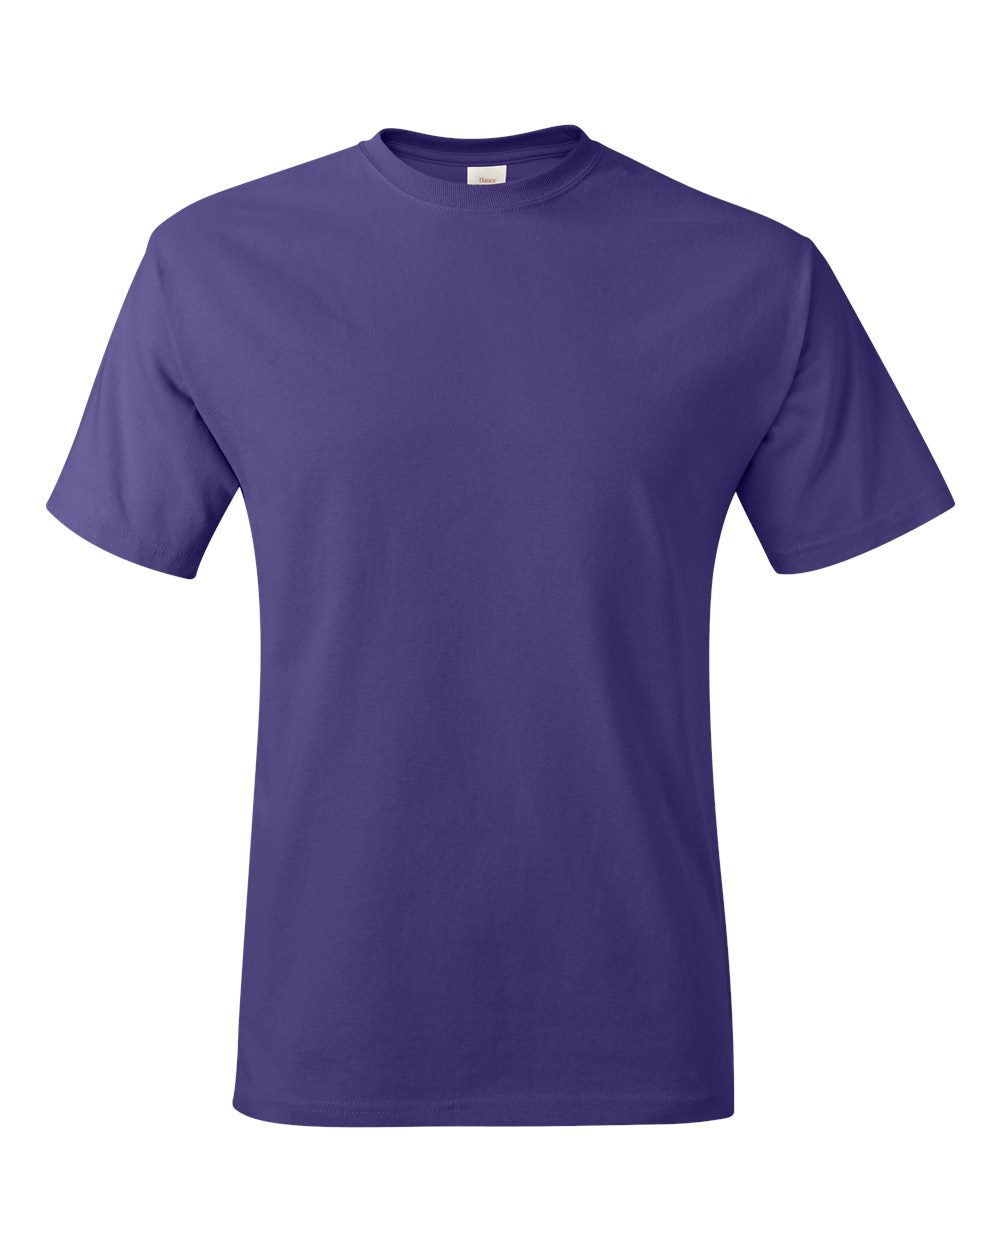 Hanes - Authentic T-Shirt - 5250